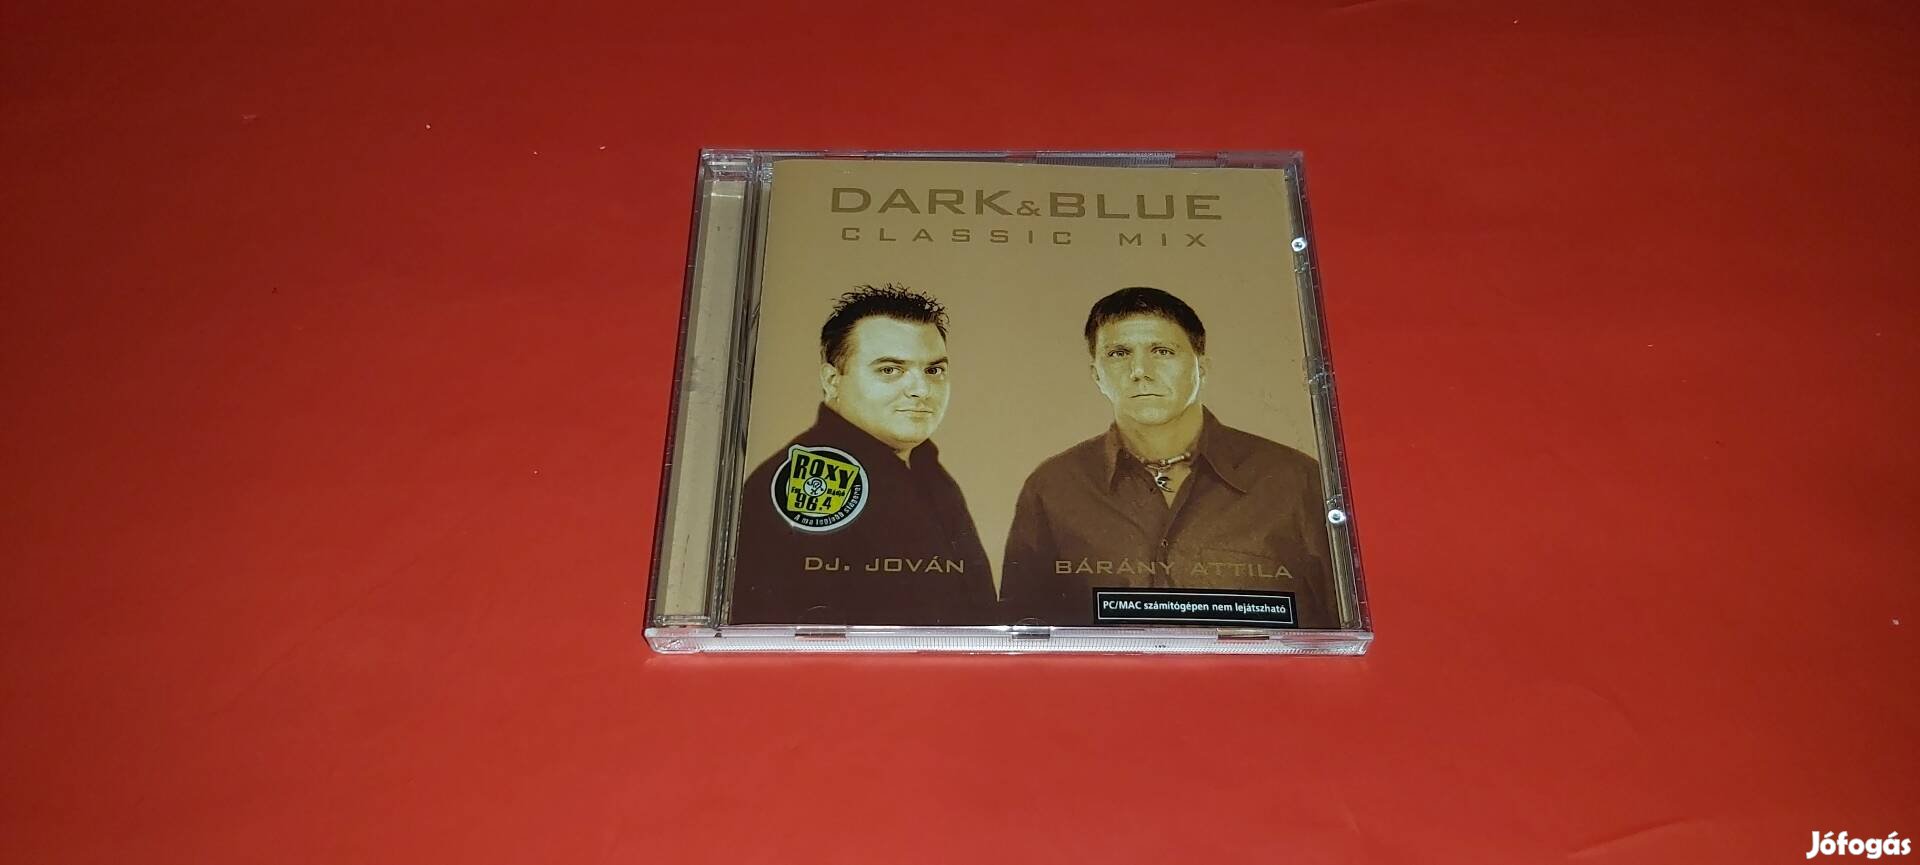 Bárány Attila & Jován Dark&Blue Classic mix Cd 2001